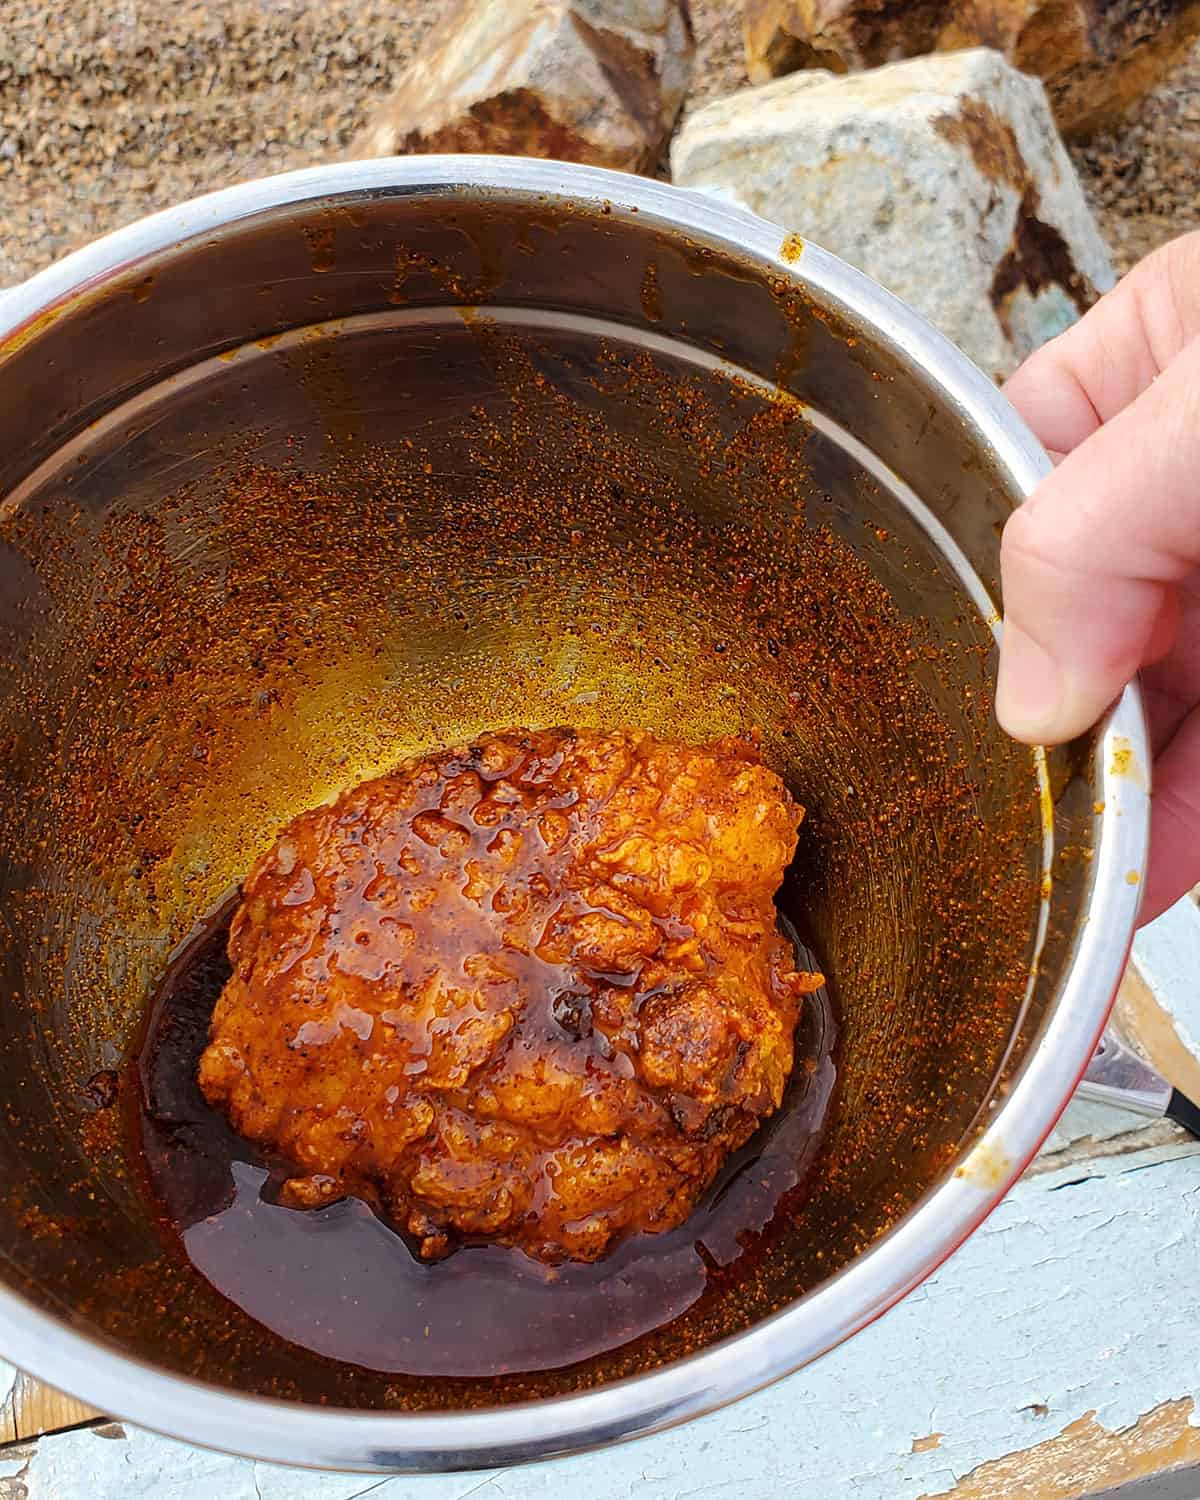 Fried chicken in bowl of Nashville hot sauce.